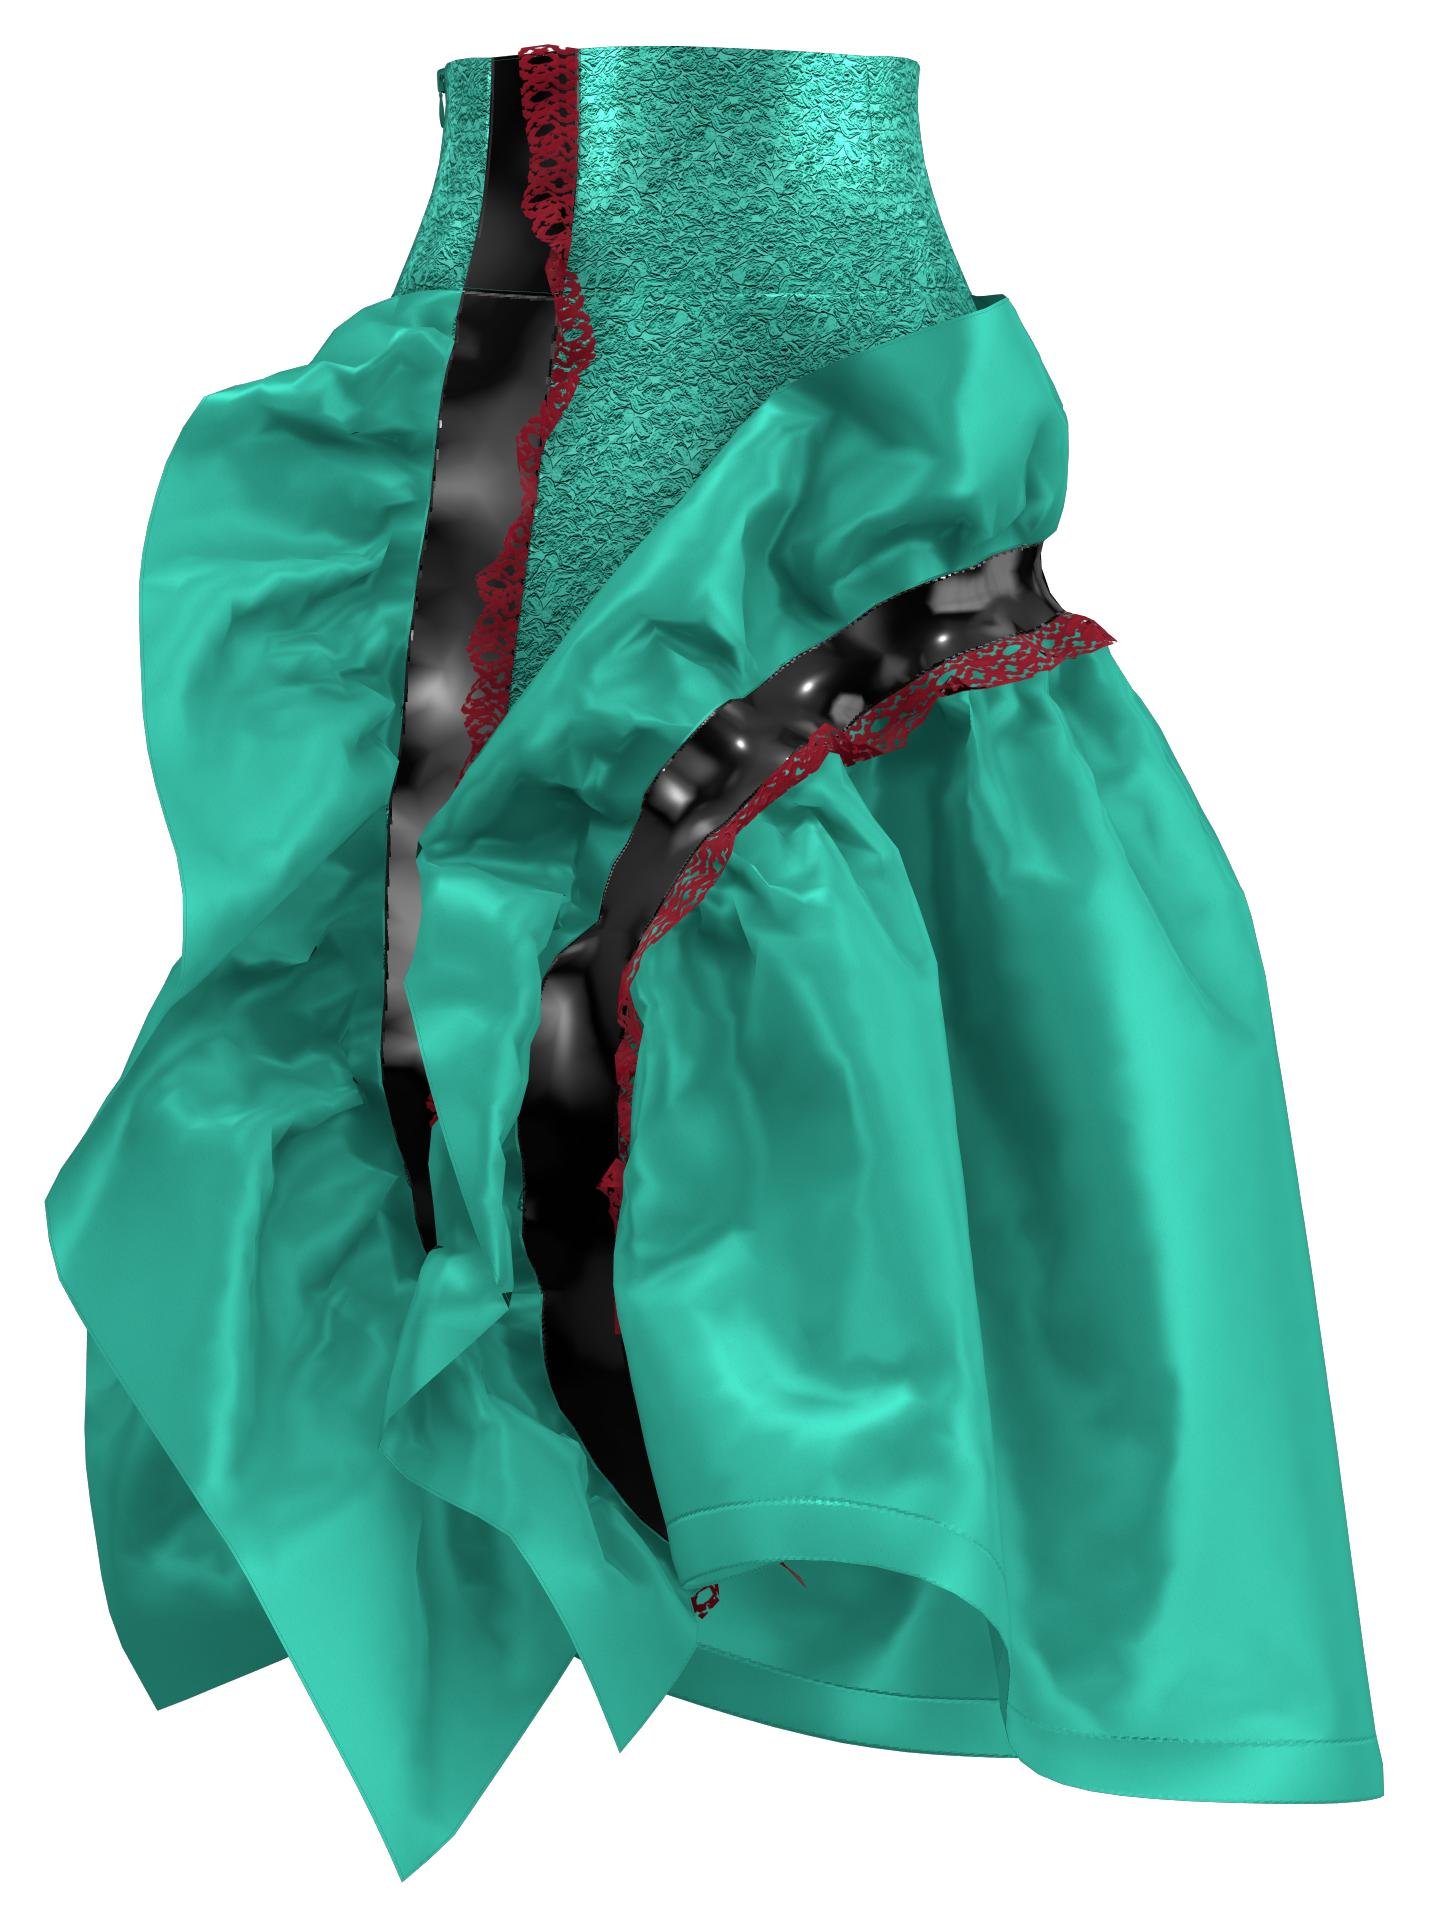 Teal Taffeta Skirt by ALEXANDER KNIGHT